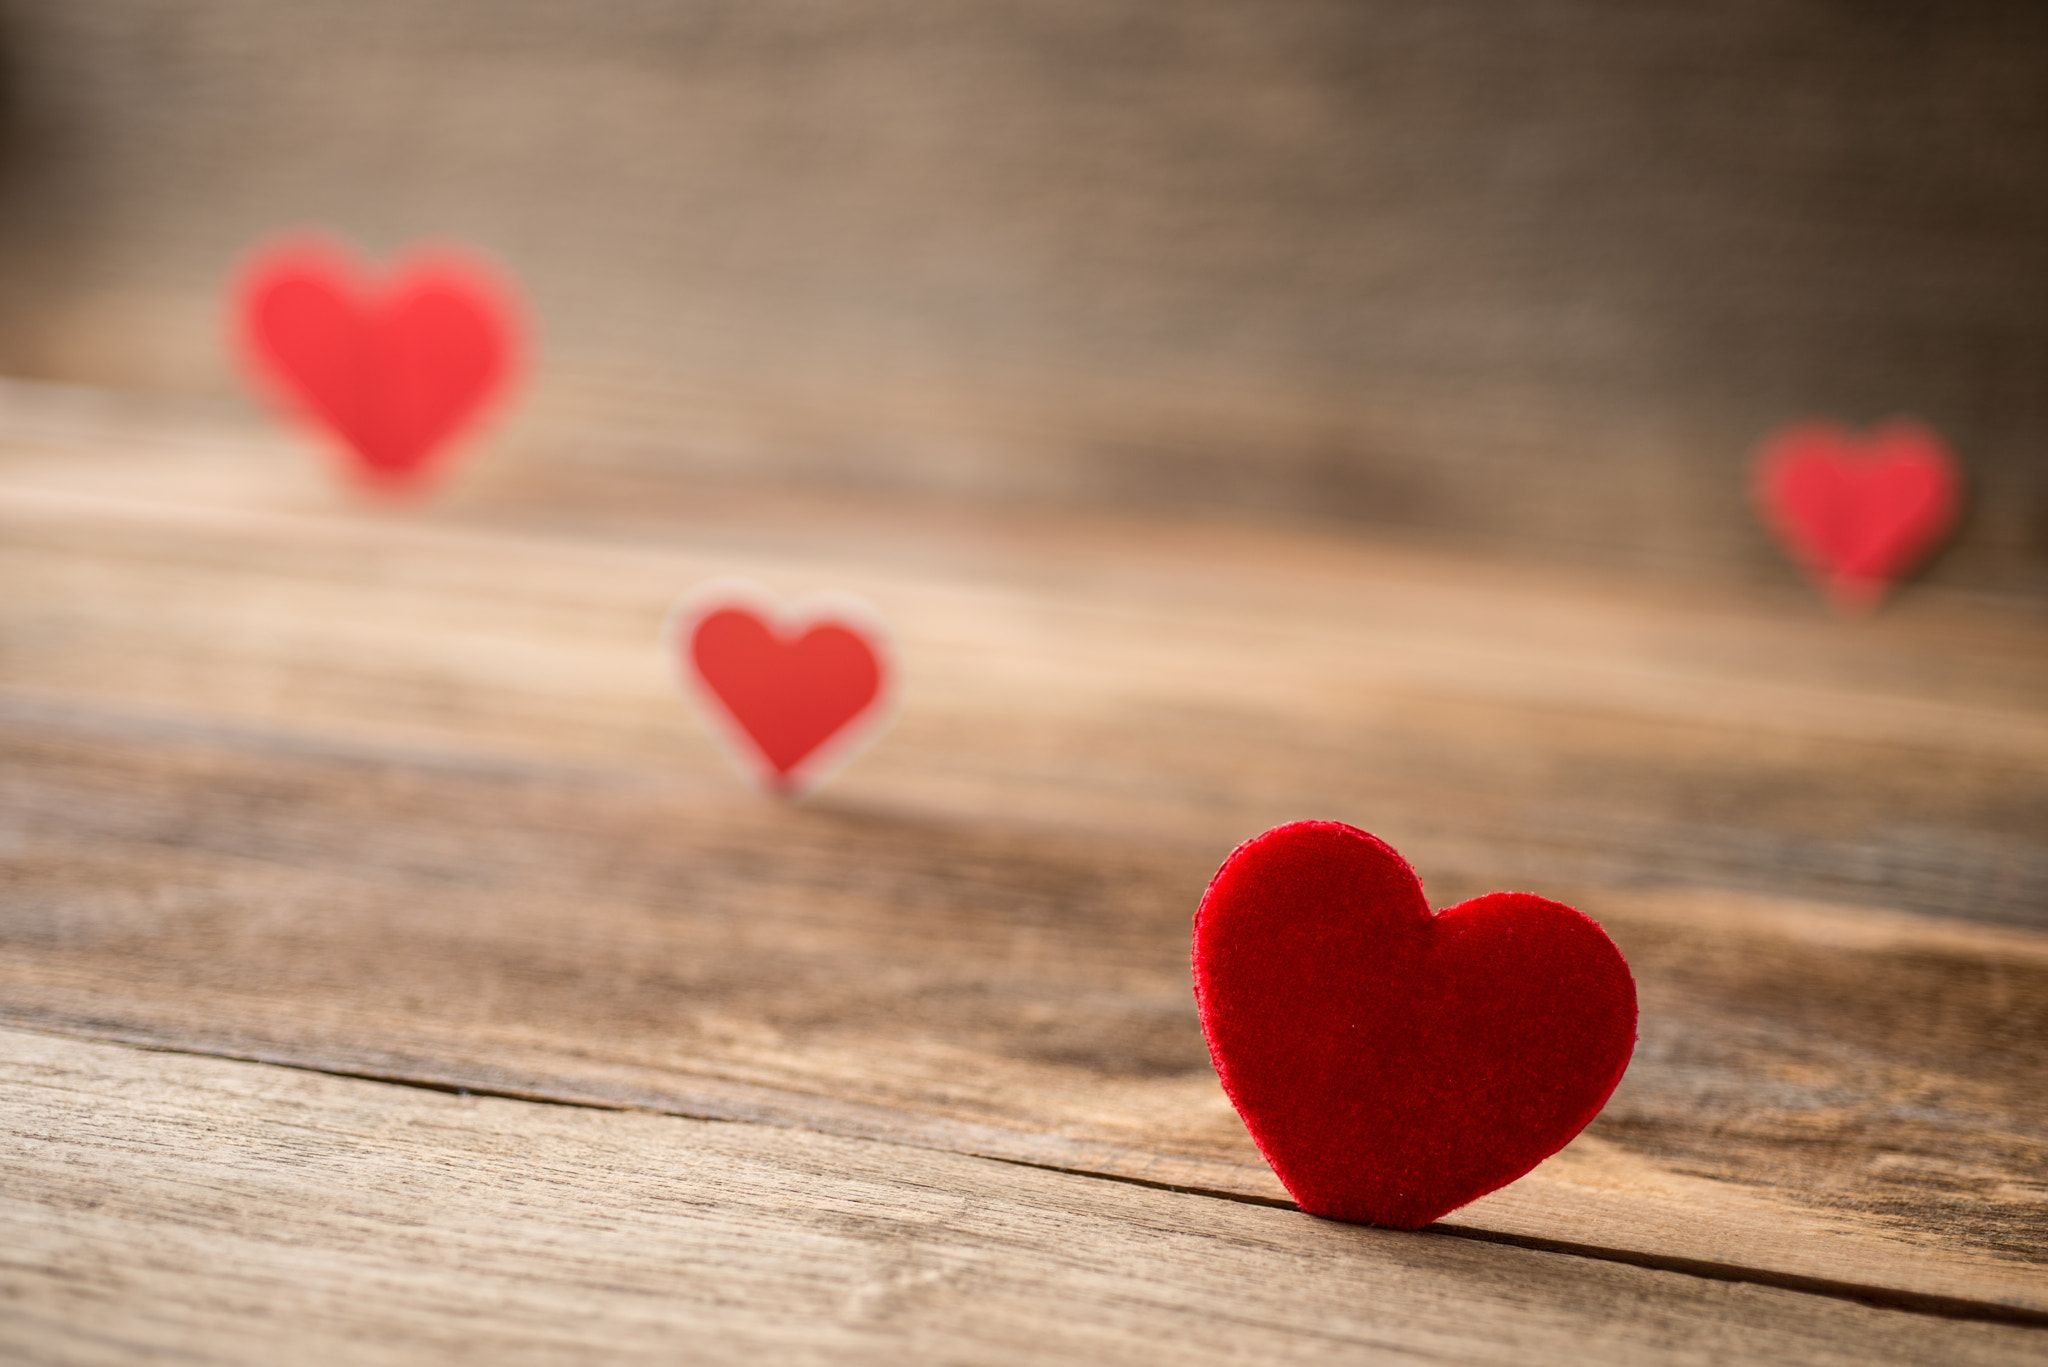 simple love wallpaper,heart,red,love,valentine's day,organ